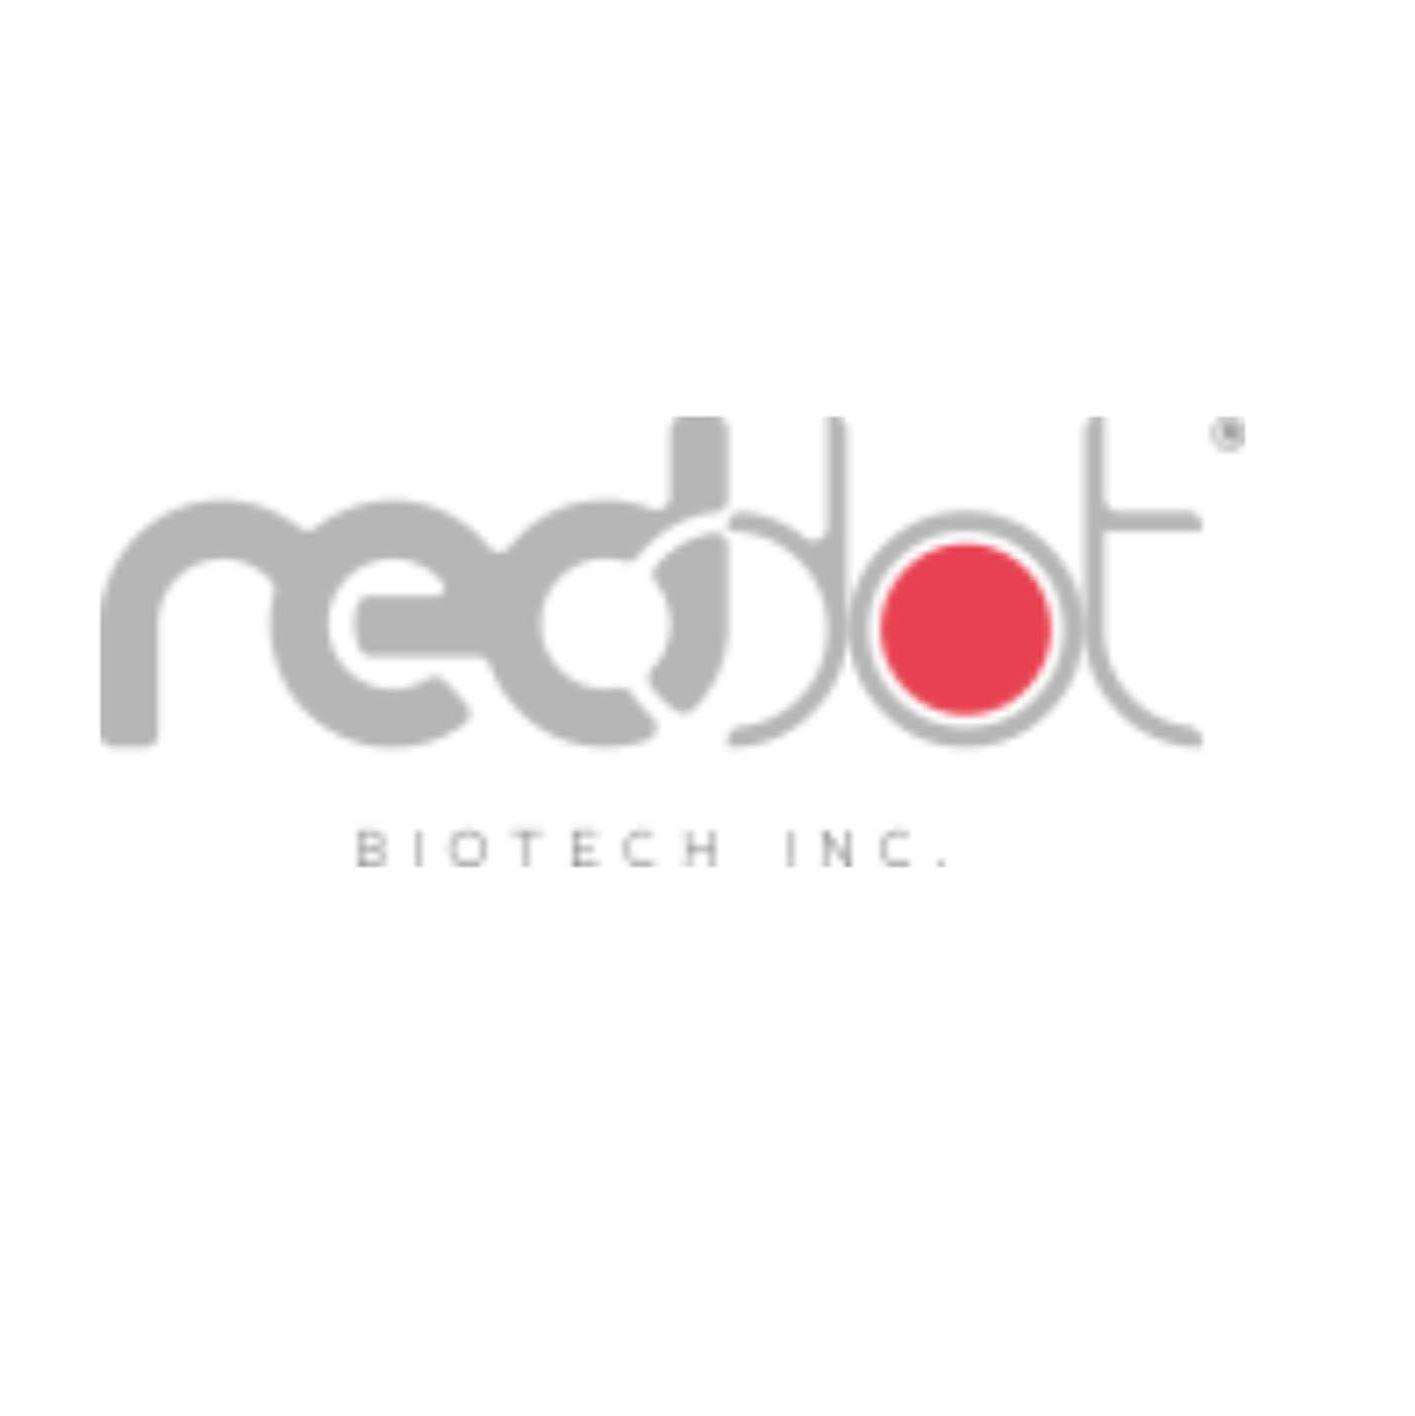 Reddot Biotech    研发高质量的ELISA试剂盒